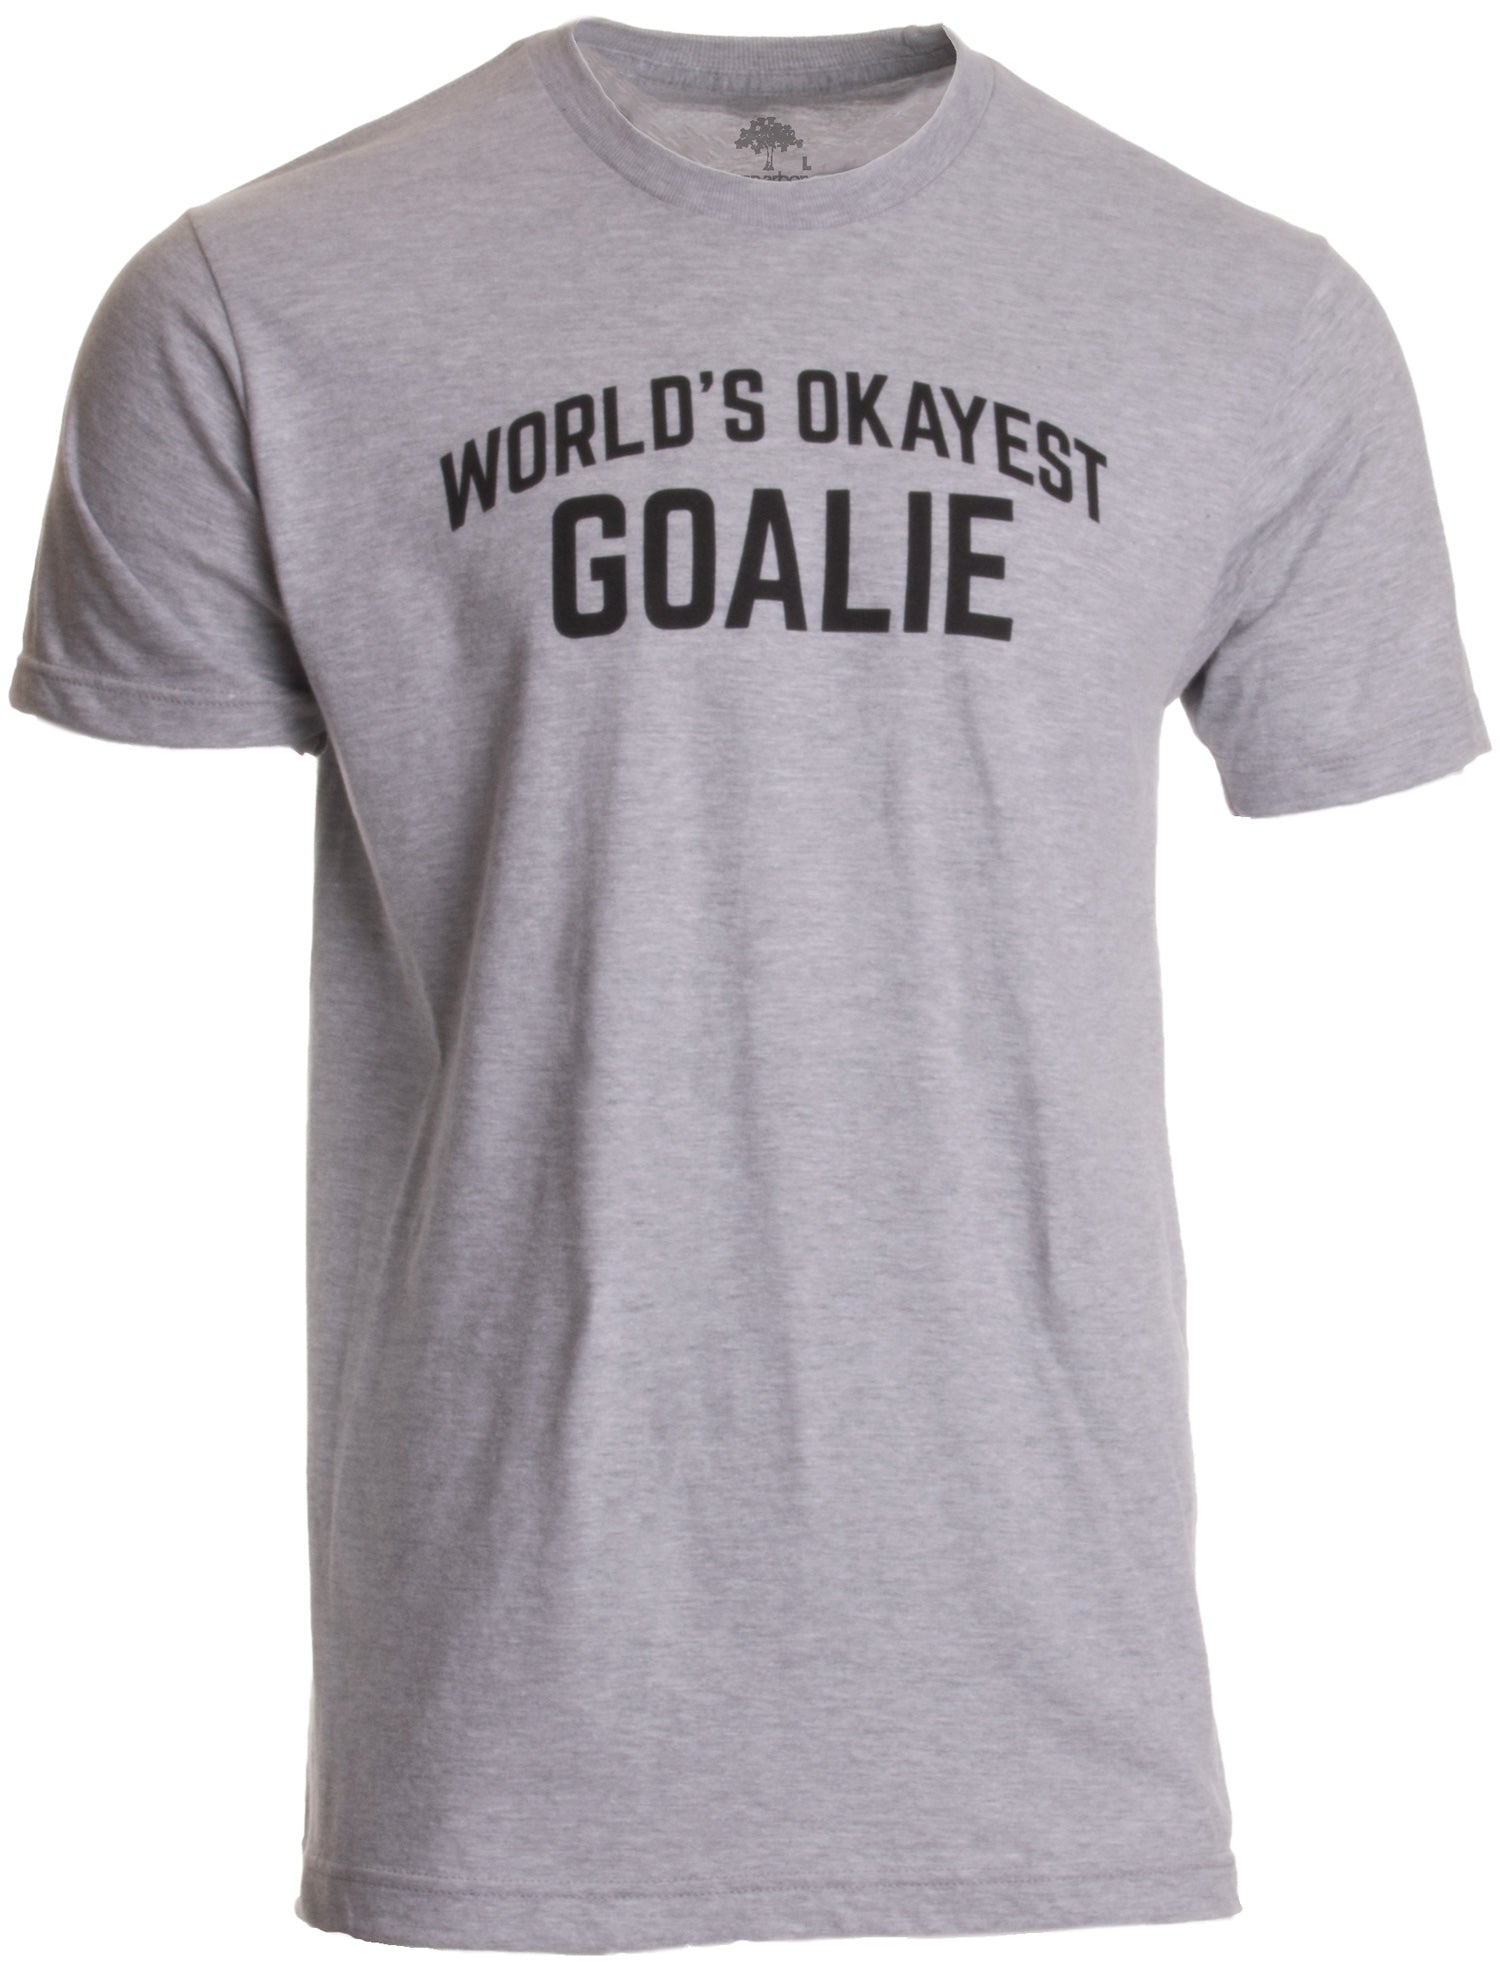 world's okayest goalie shirt